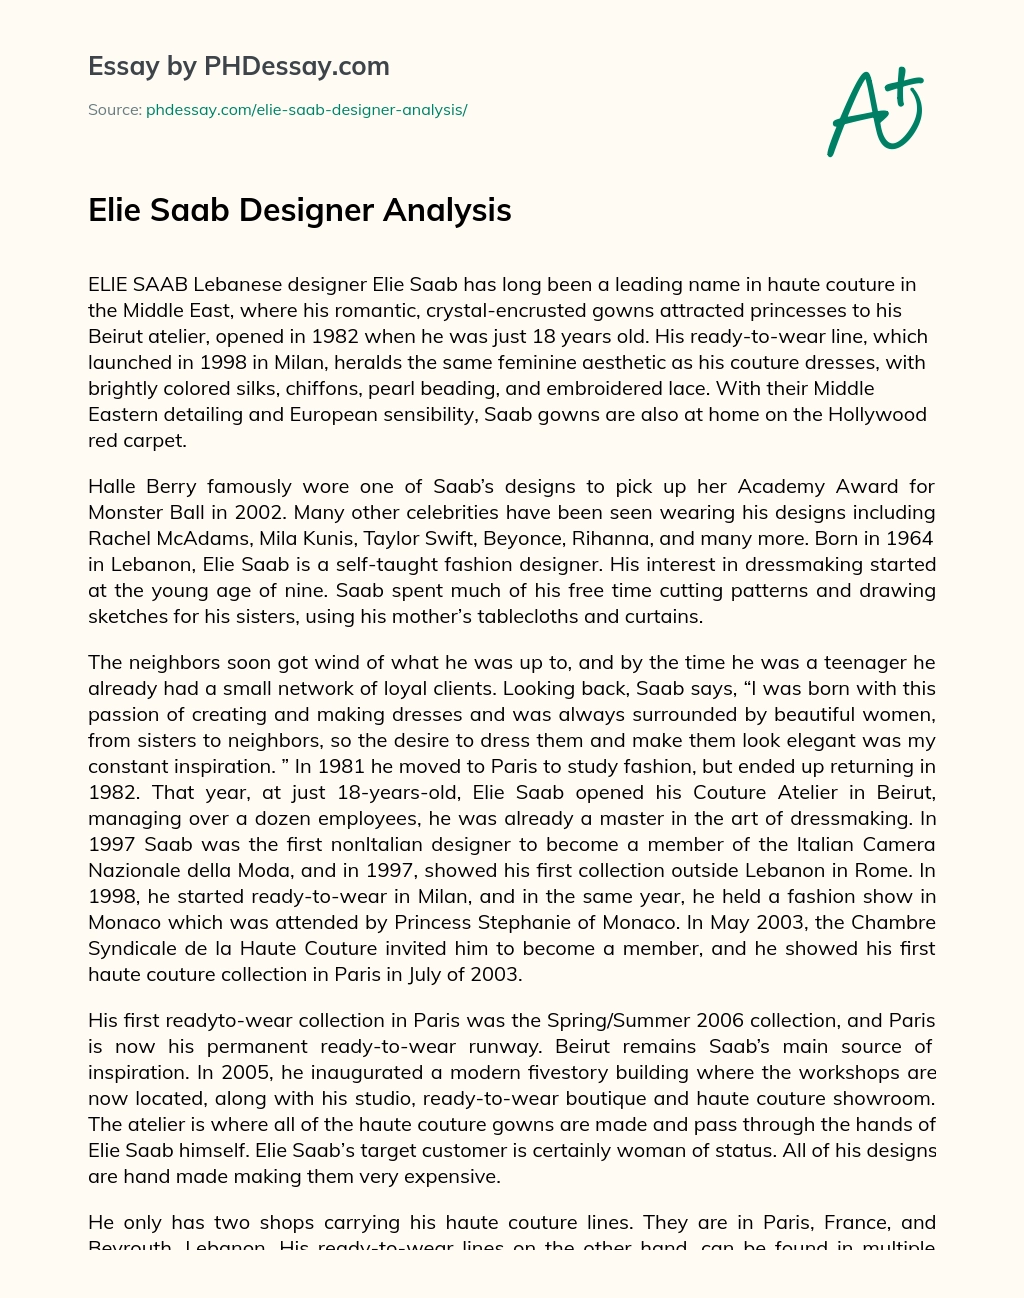 Elie Saab Designer Analysis essay